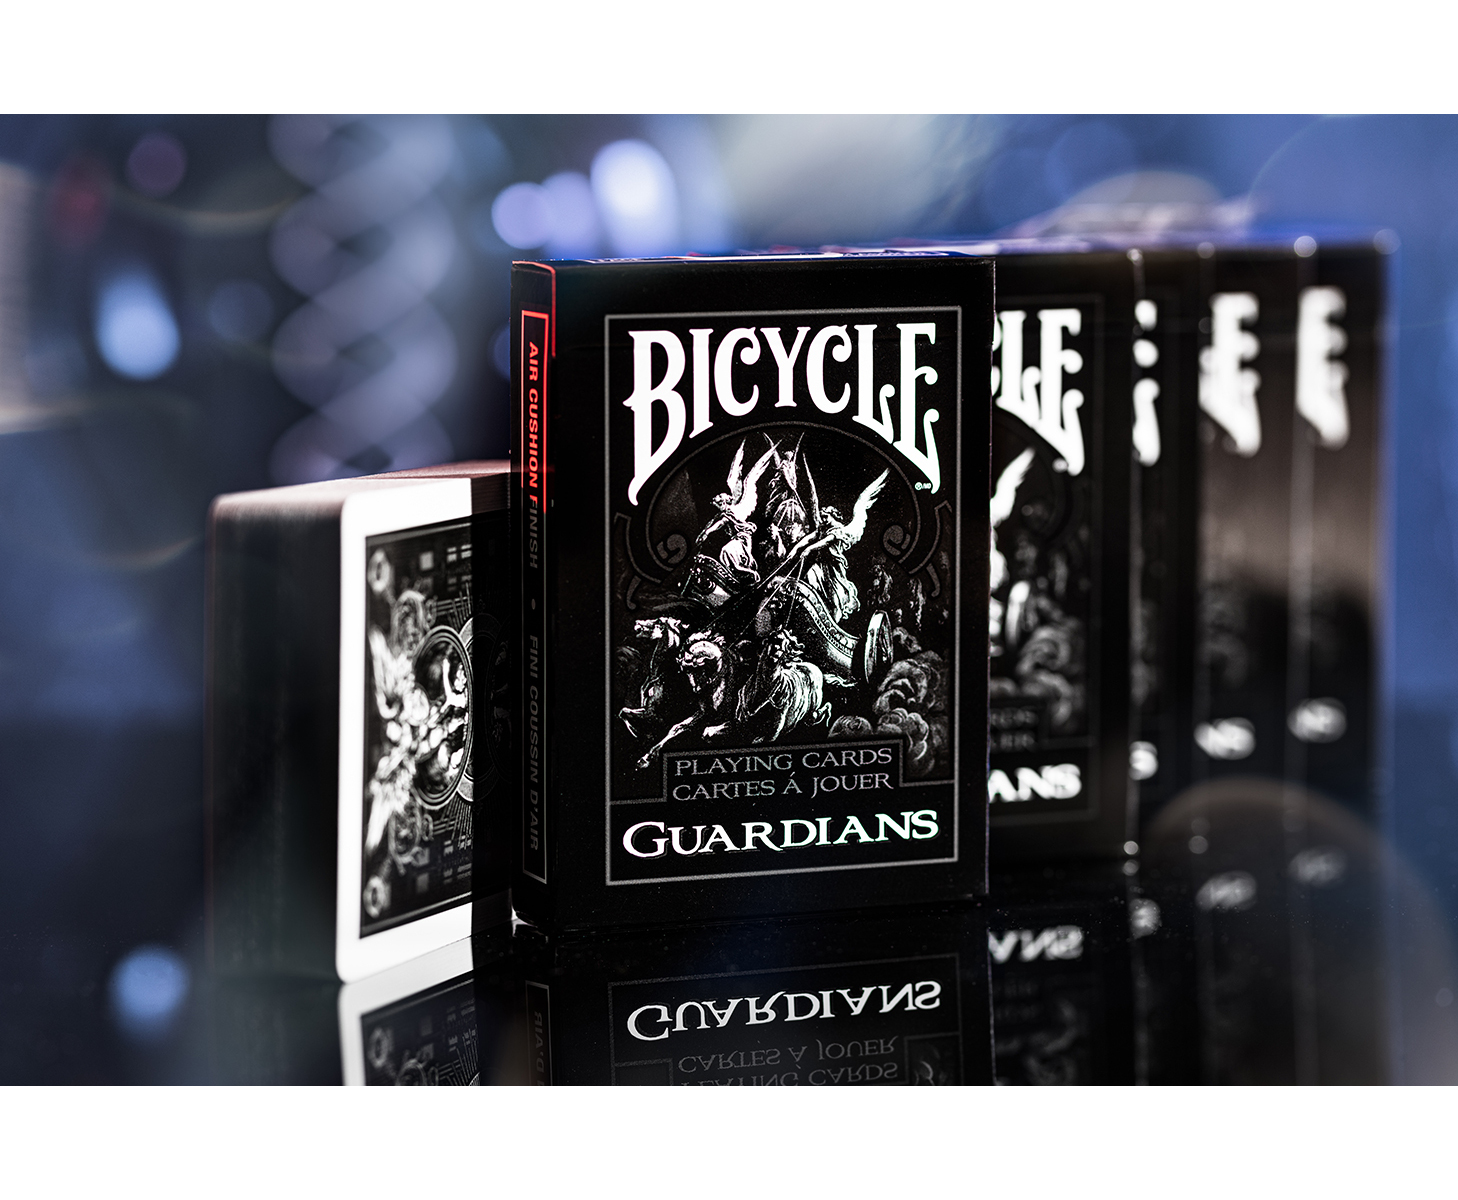 ASS ALTENBURGER Bicycle Kartendeck Kartenspiel - Guardians